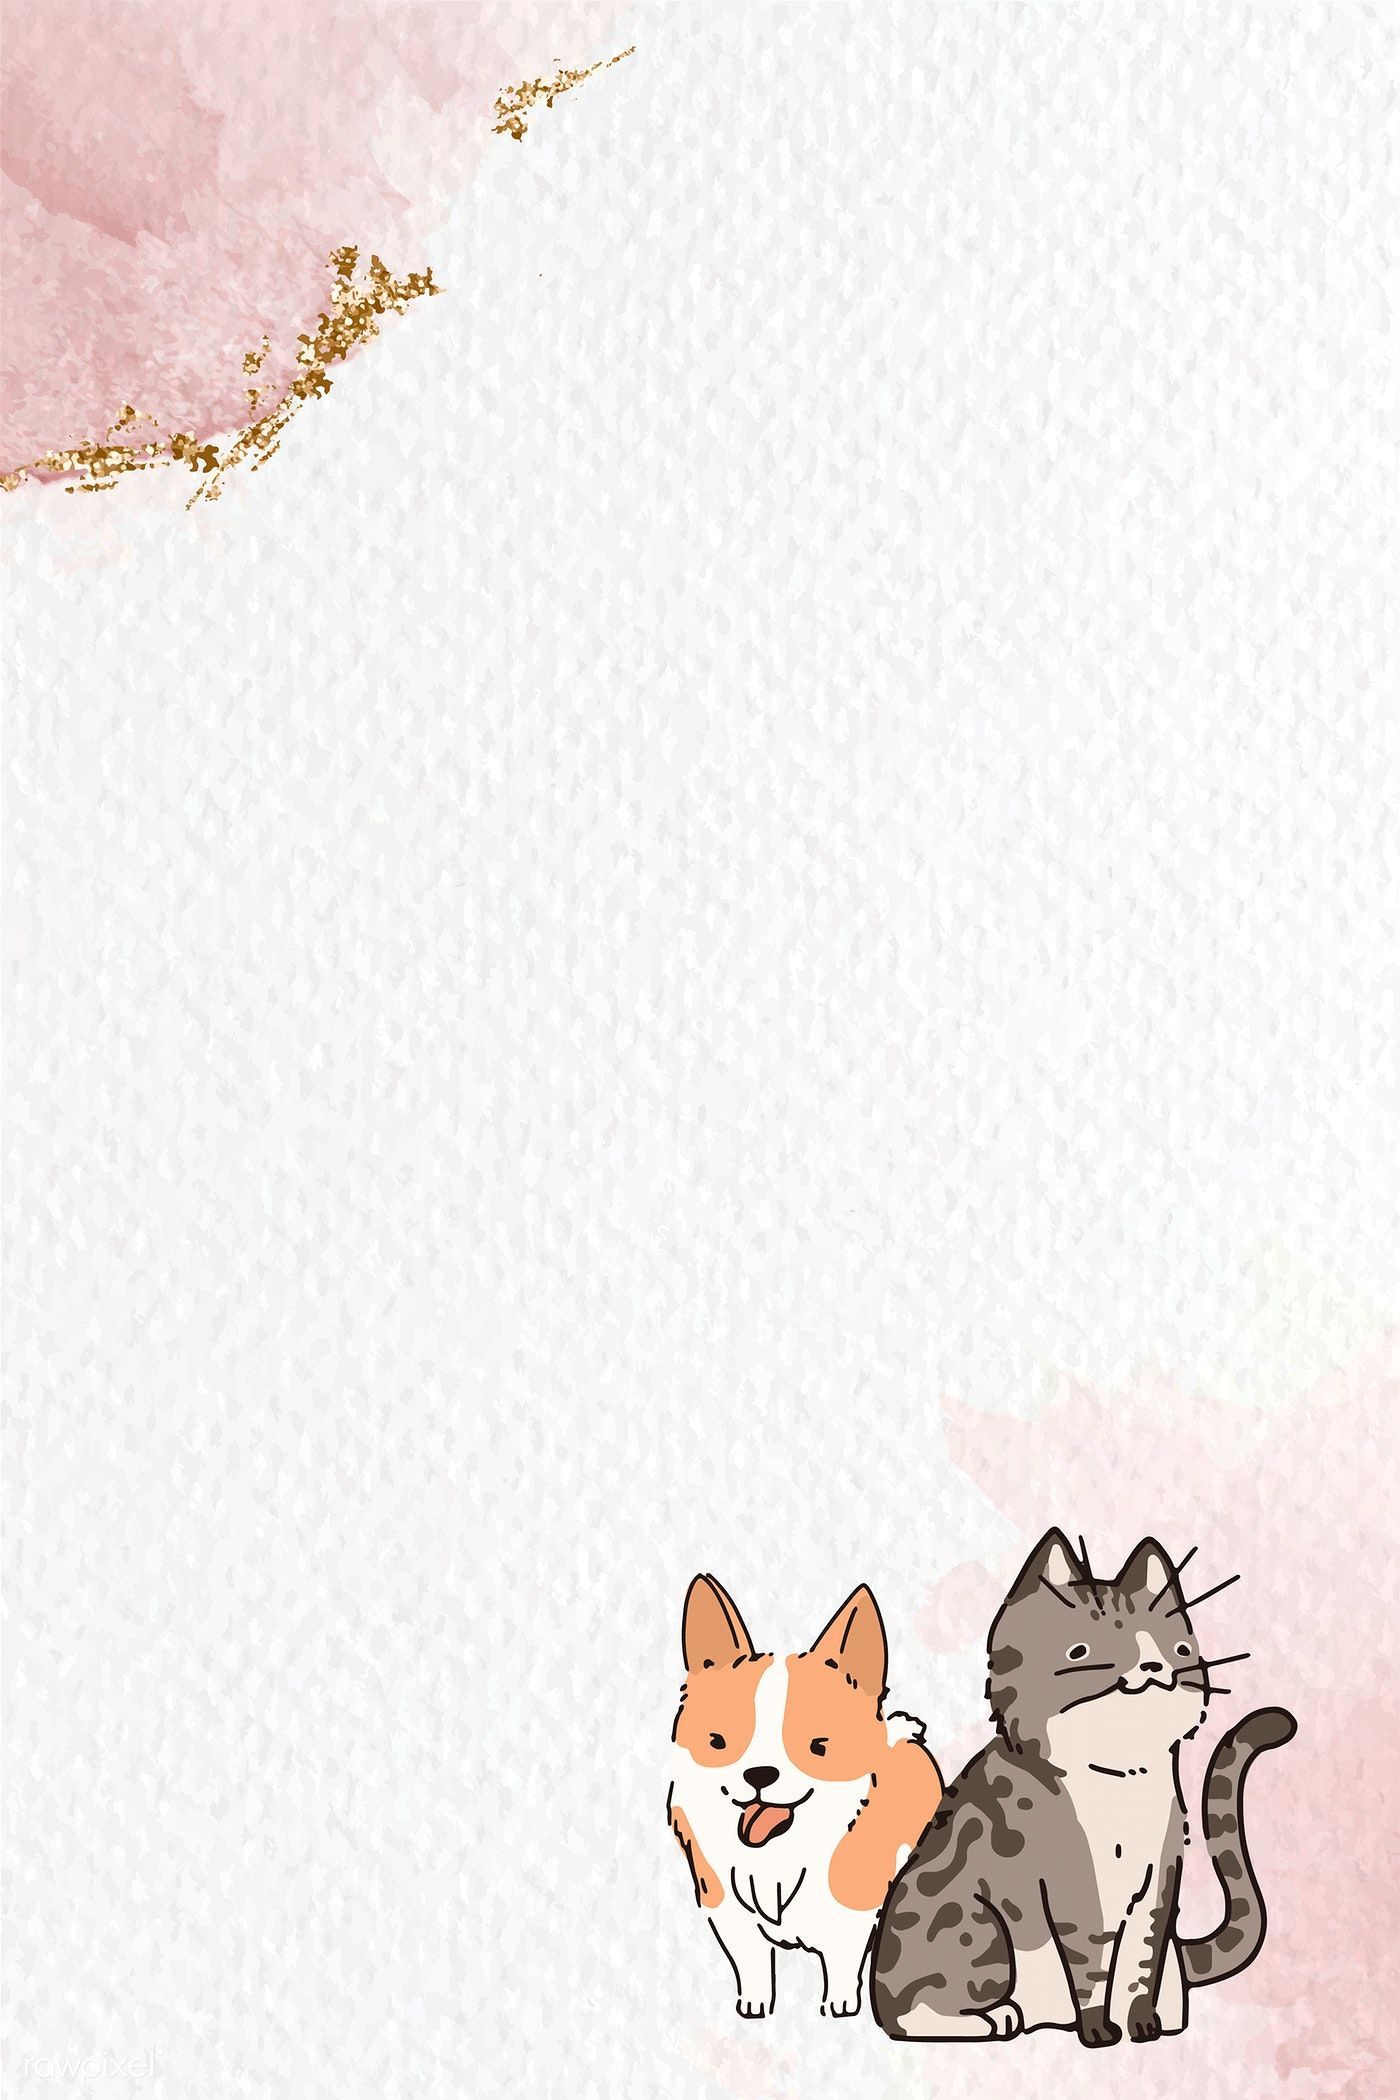 Cat And Dog Cartoon Wallpaper / Cute Cat And Dog Cartoon Royalty Free